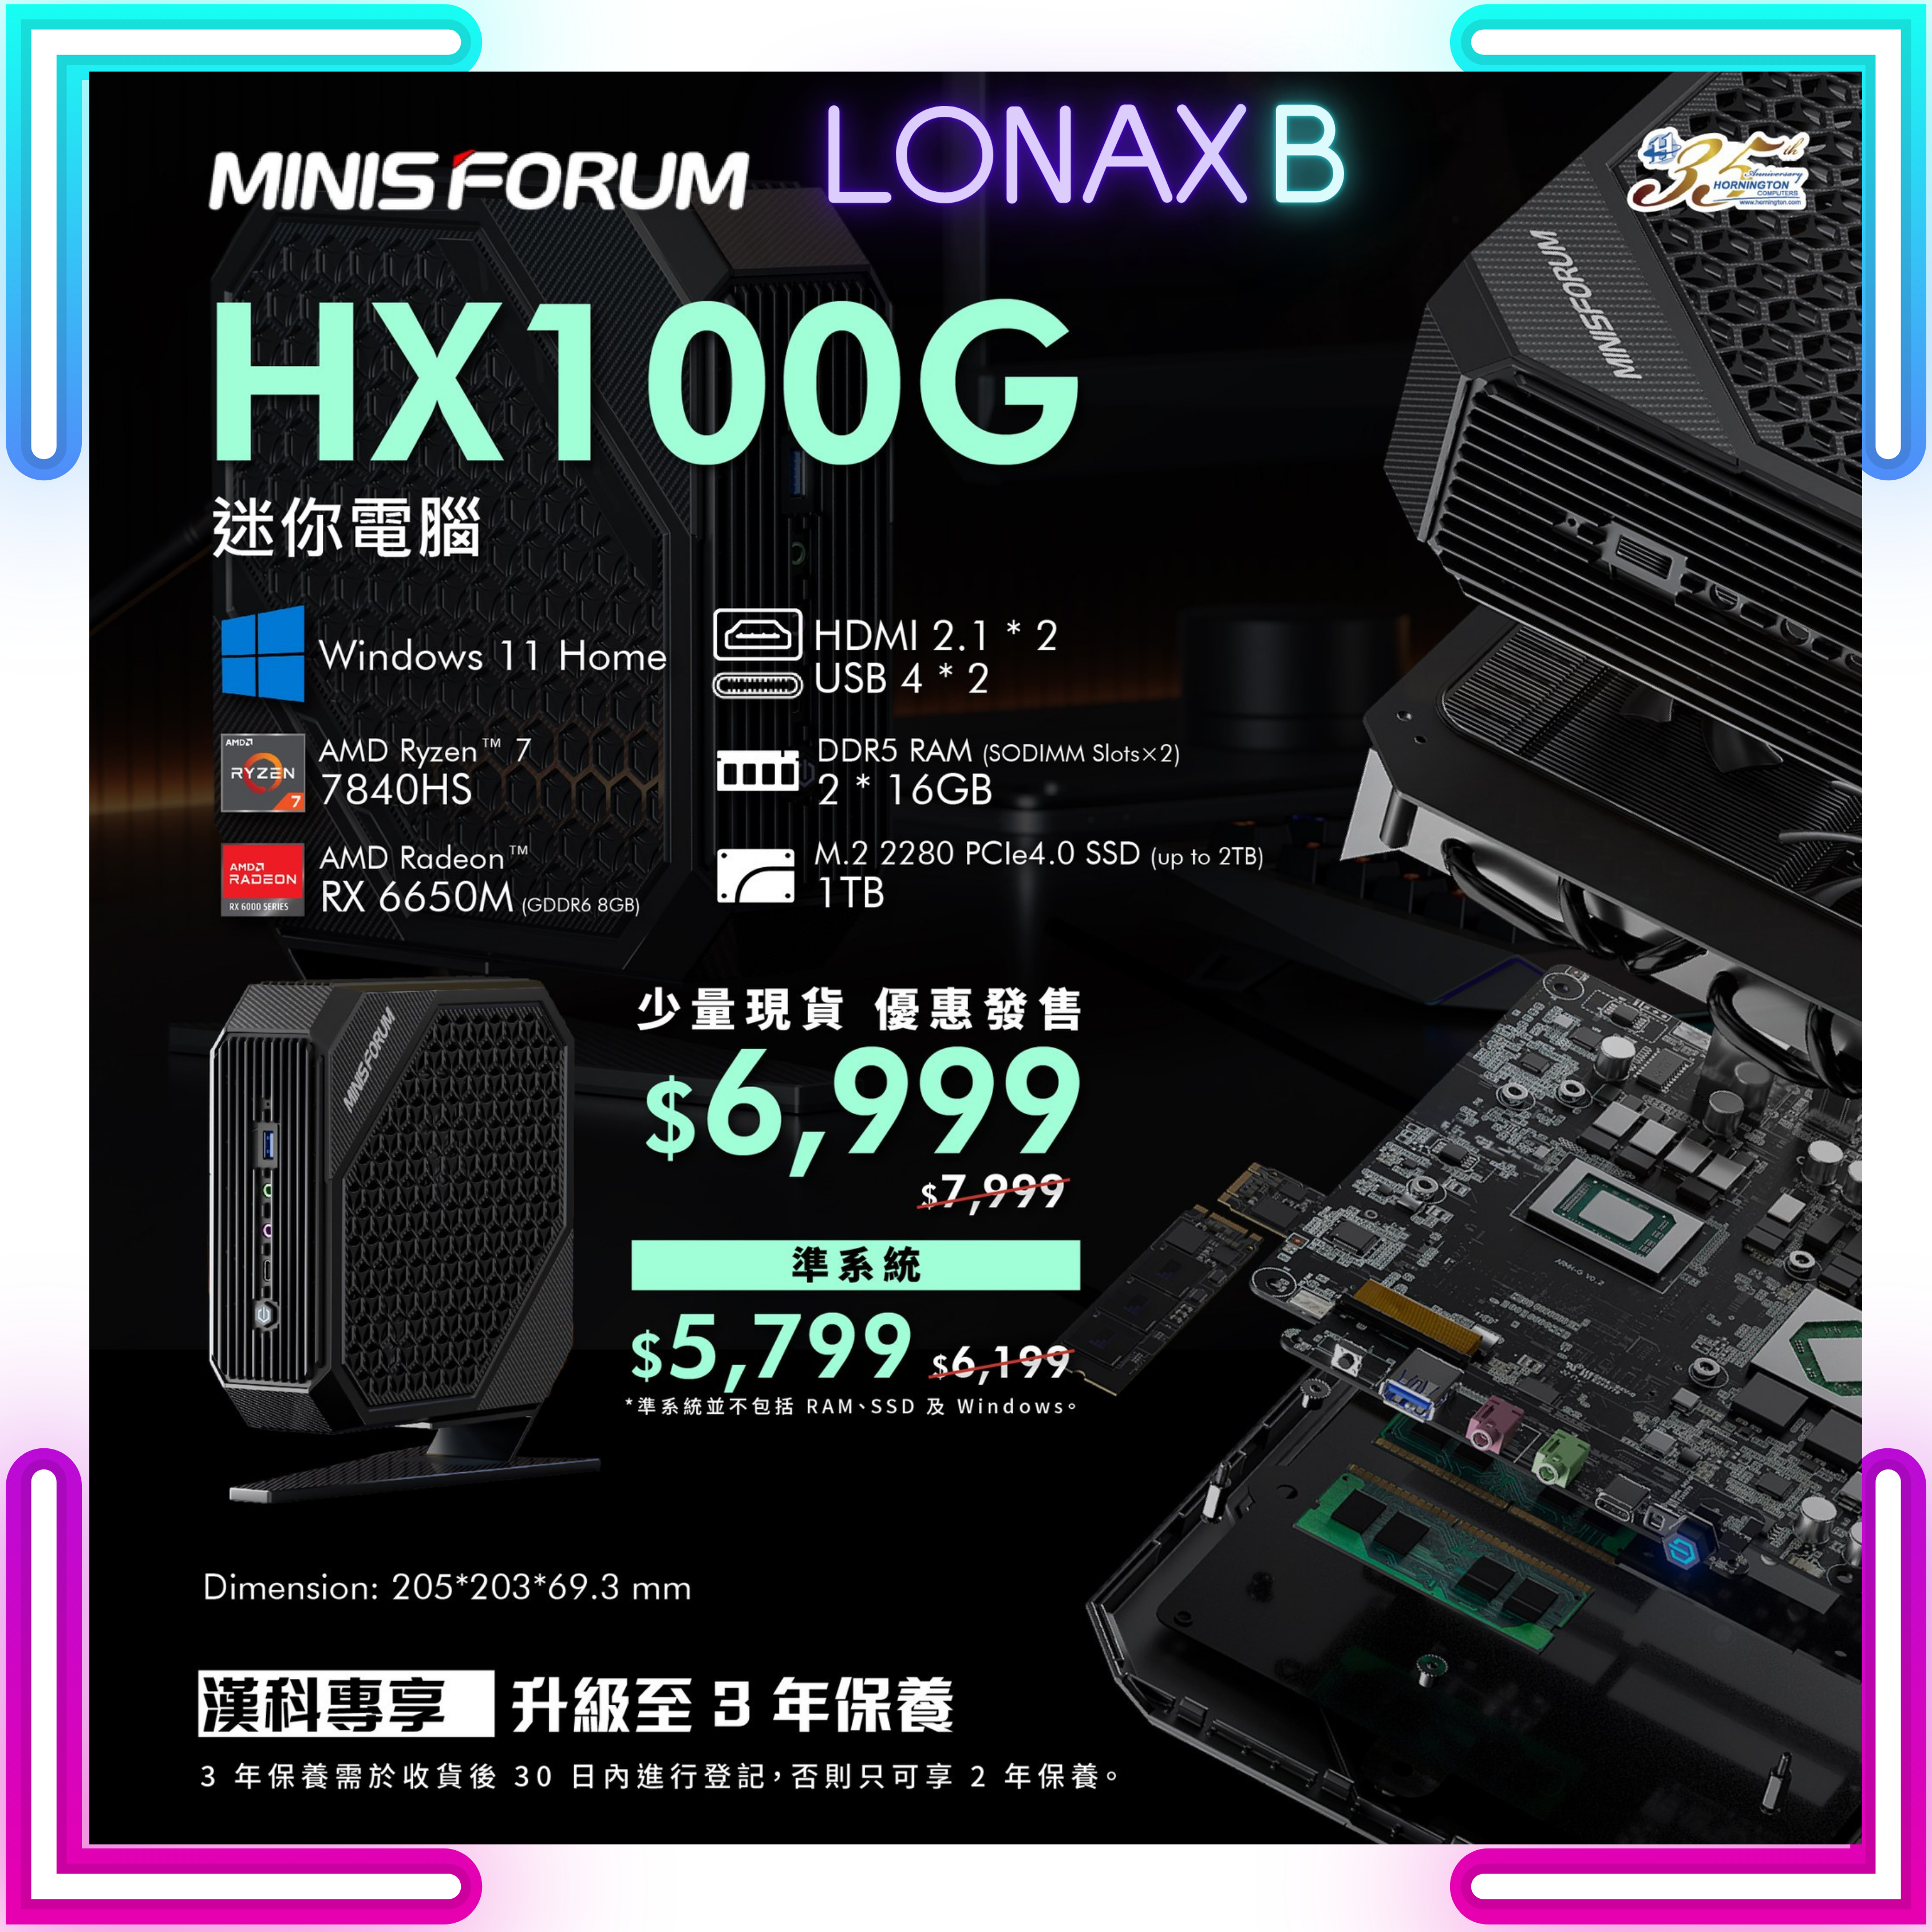 Minisforum HX100G Mini PC (Ryzen 7 7840HS, Radeon RX 6650M, 32GB DDR5 RAM, 1TB SSD, Windows 11 Home) free upgrade to 3-year warranty 